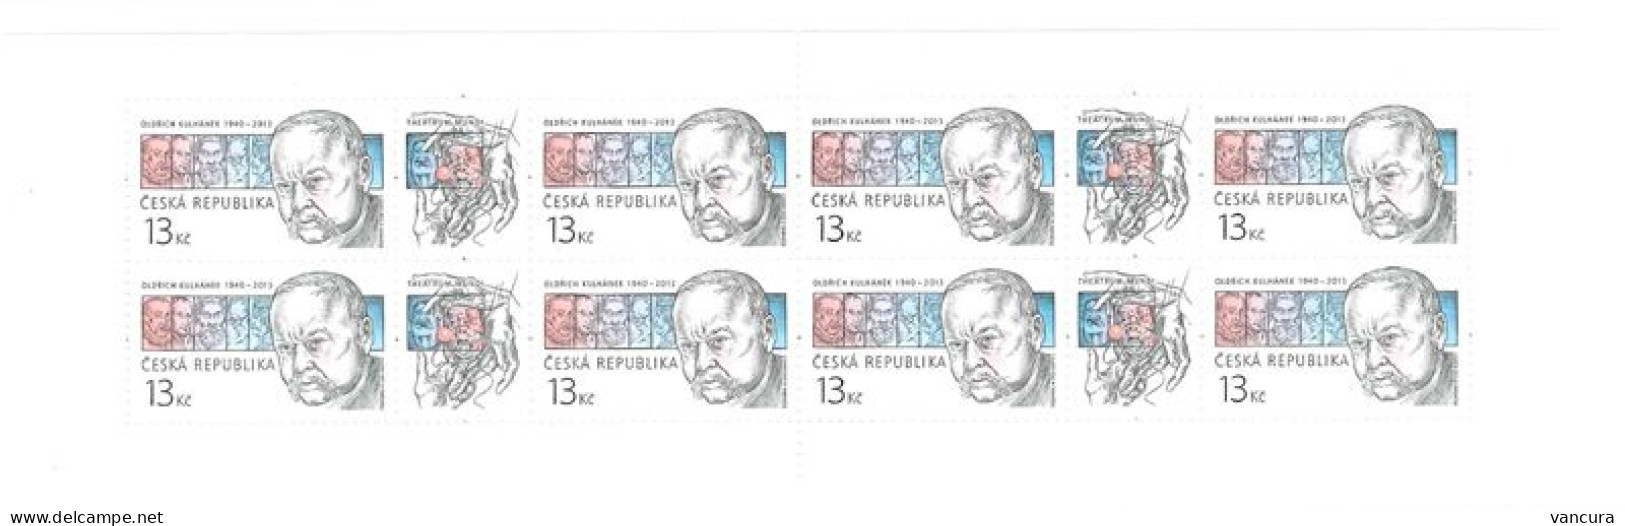 Booklet 831 Czech Republic Oldrich Kulhanek Anniversary 2015 - Unused Stamps